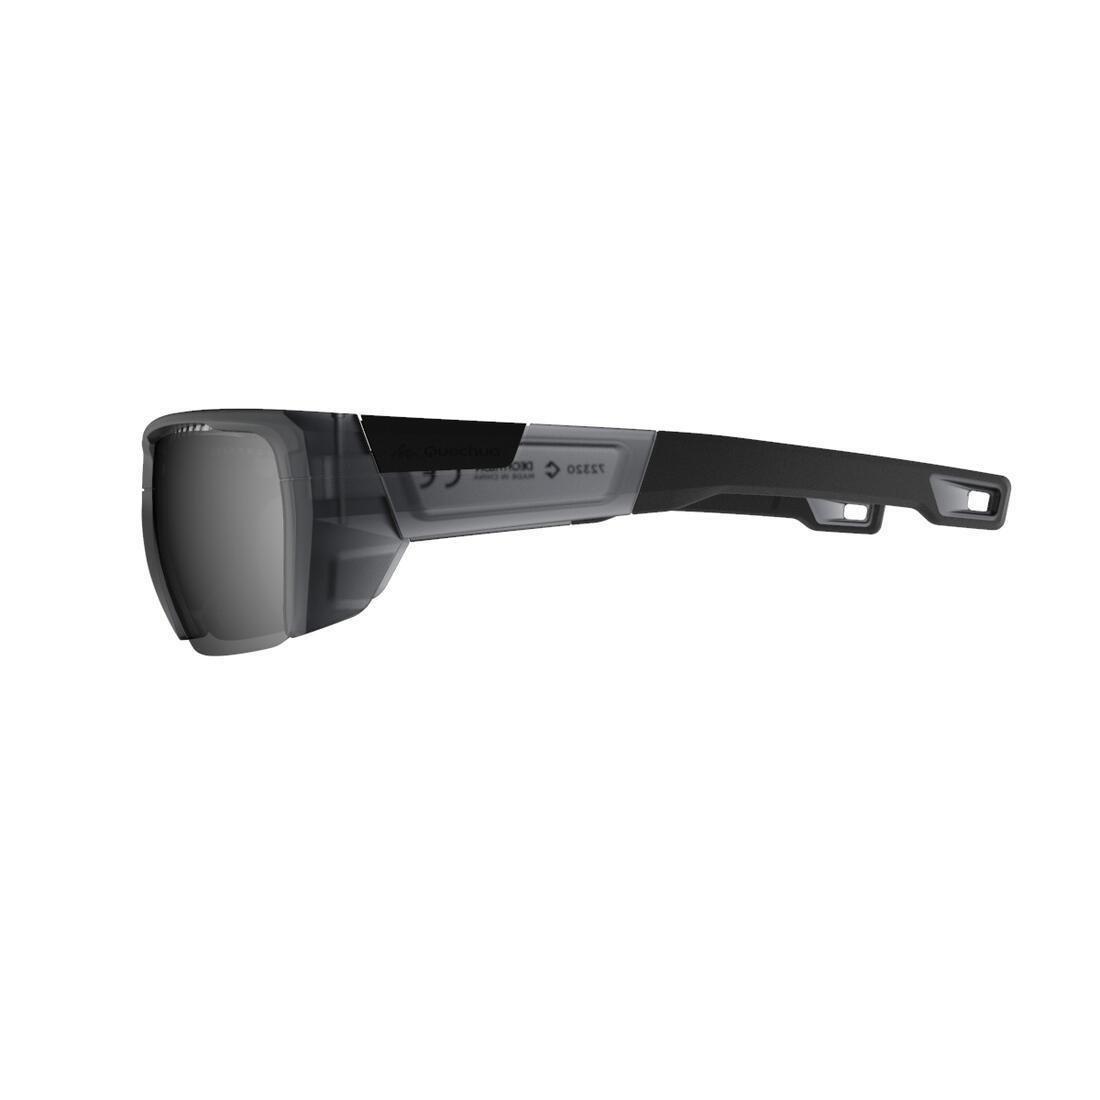 QUECHUA - Adult, Polarised Category 4 Hiking Sunglasses, MH590, Black